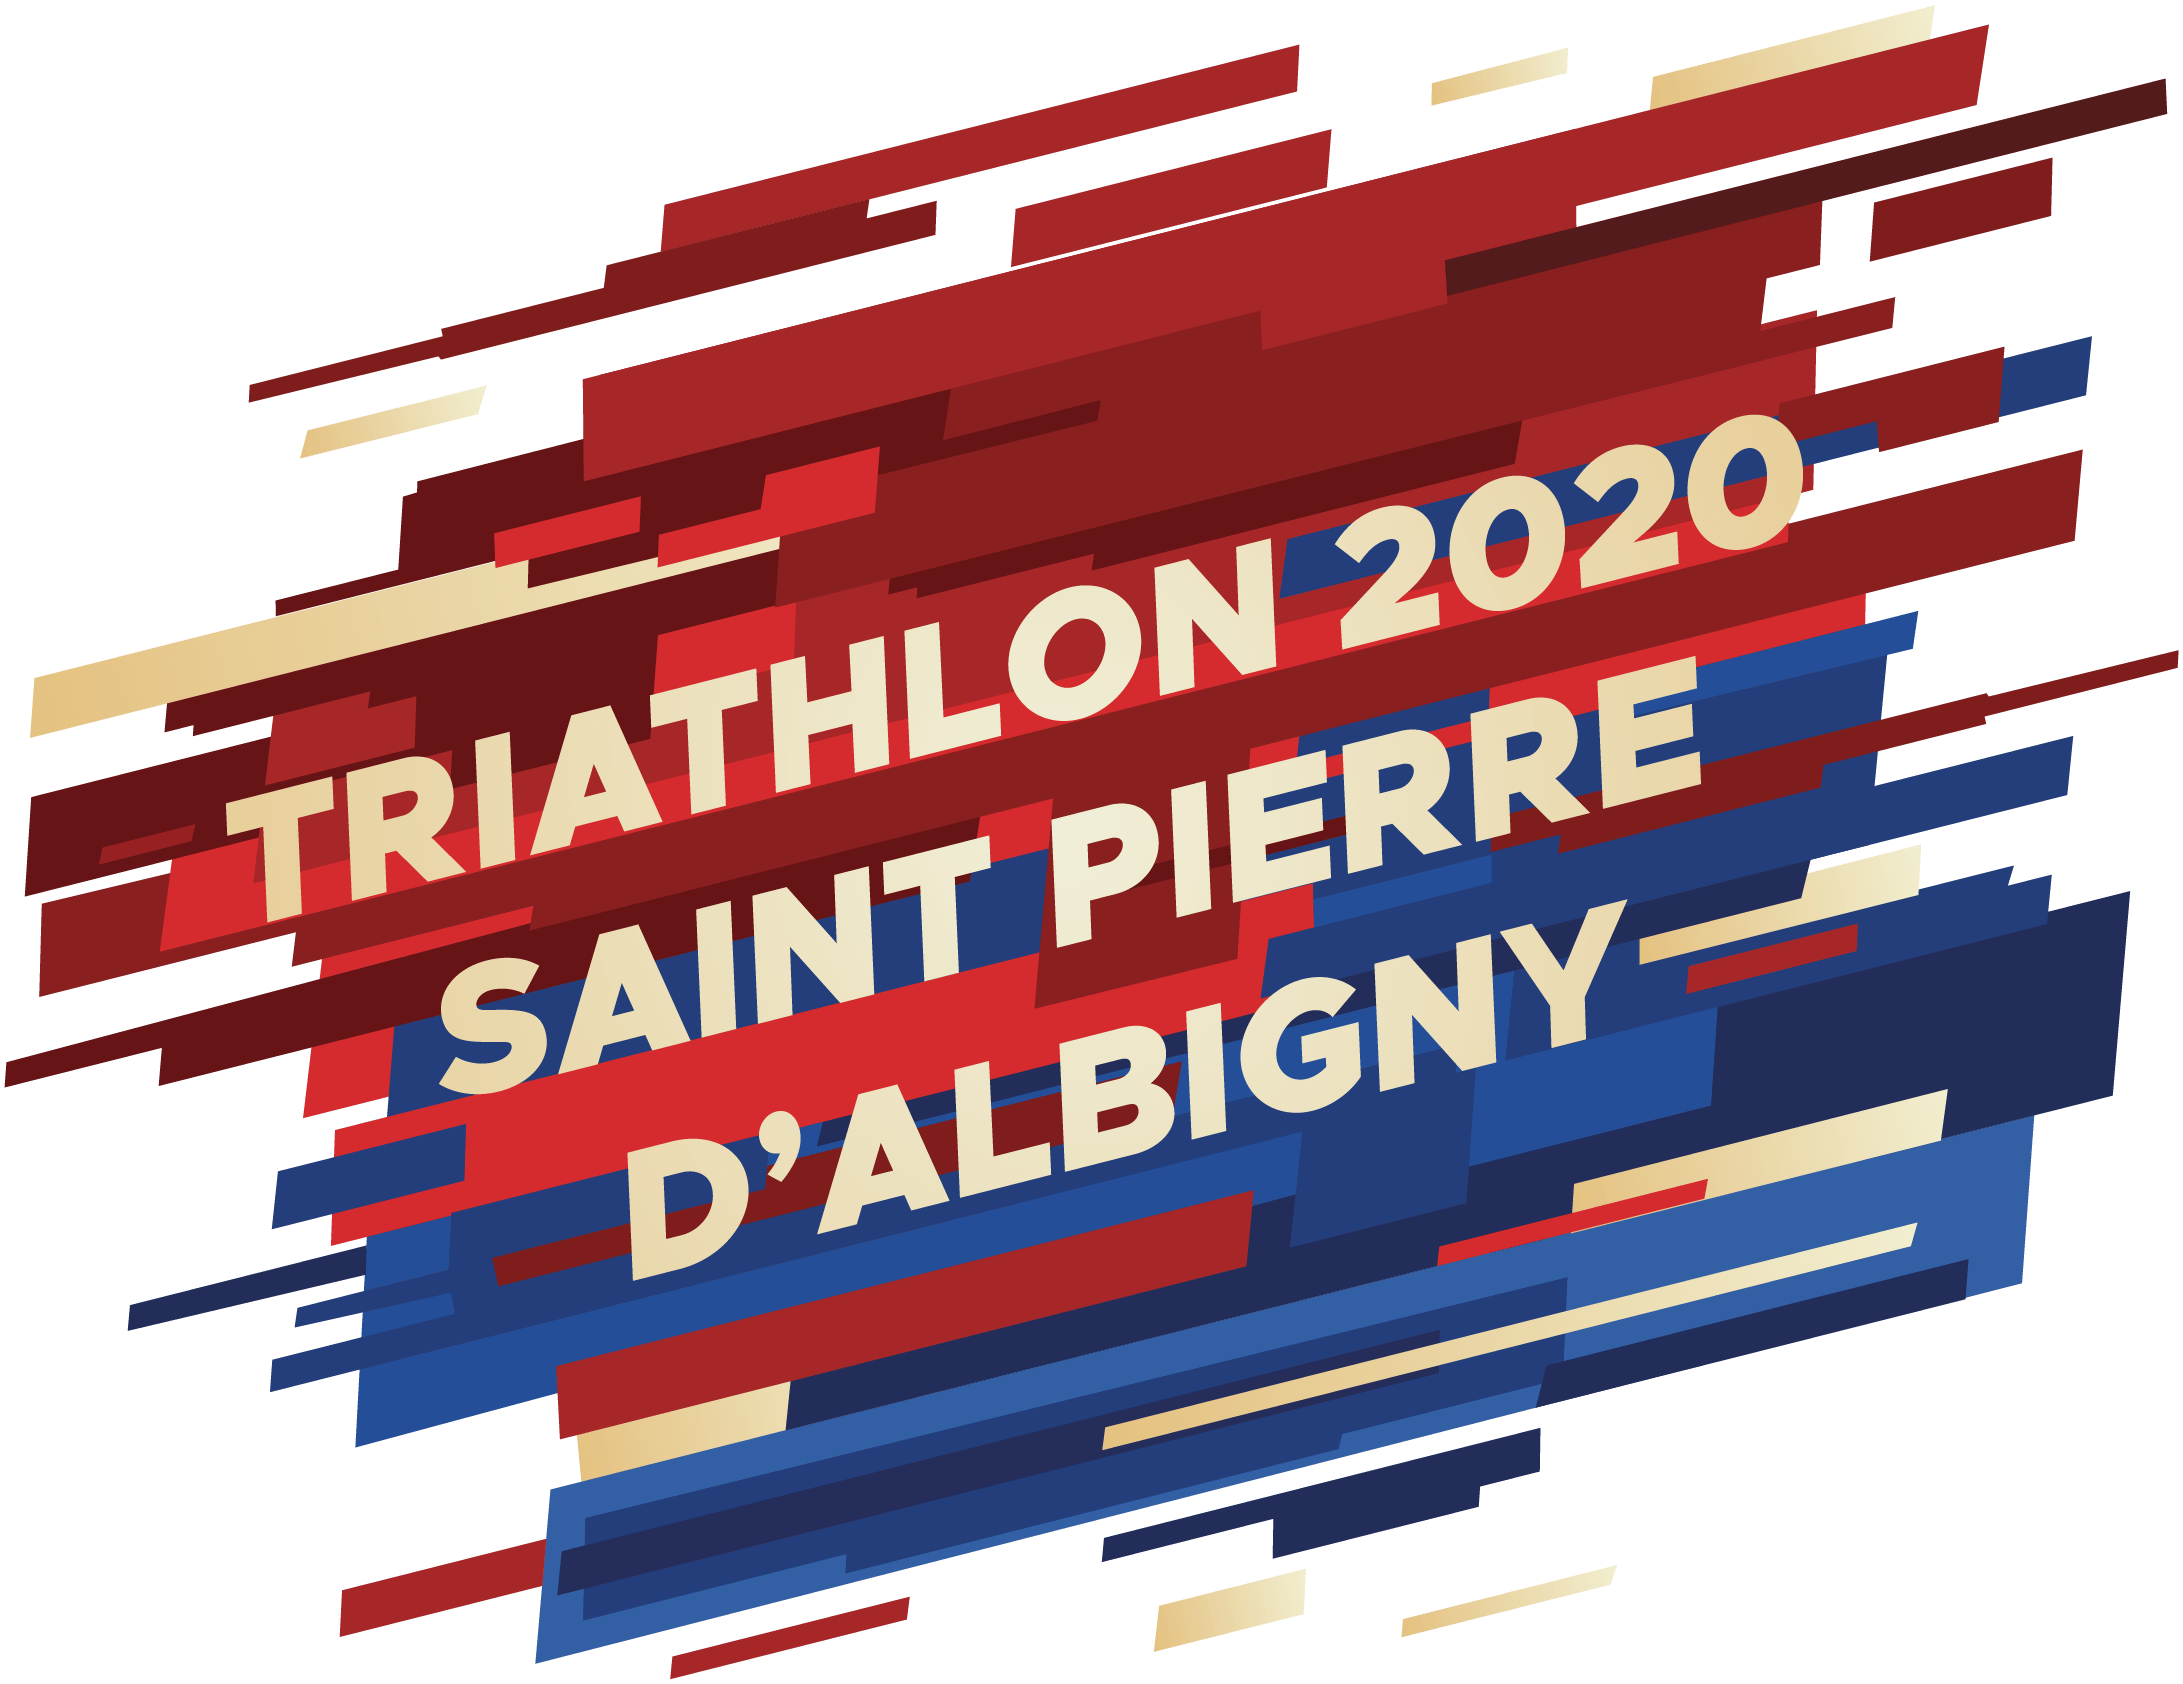 Triathlon Saint Pierre Albigny logo